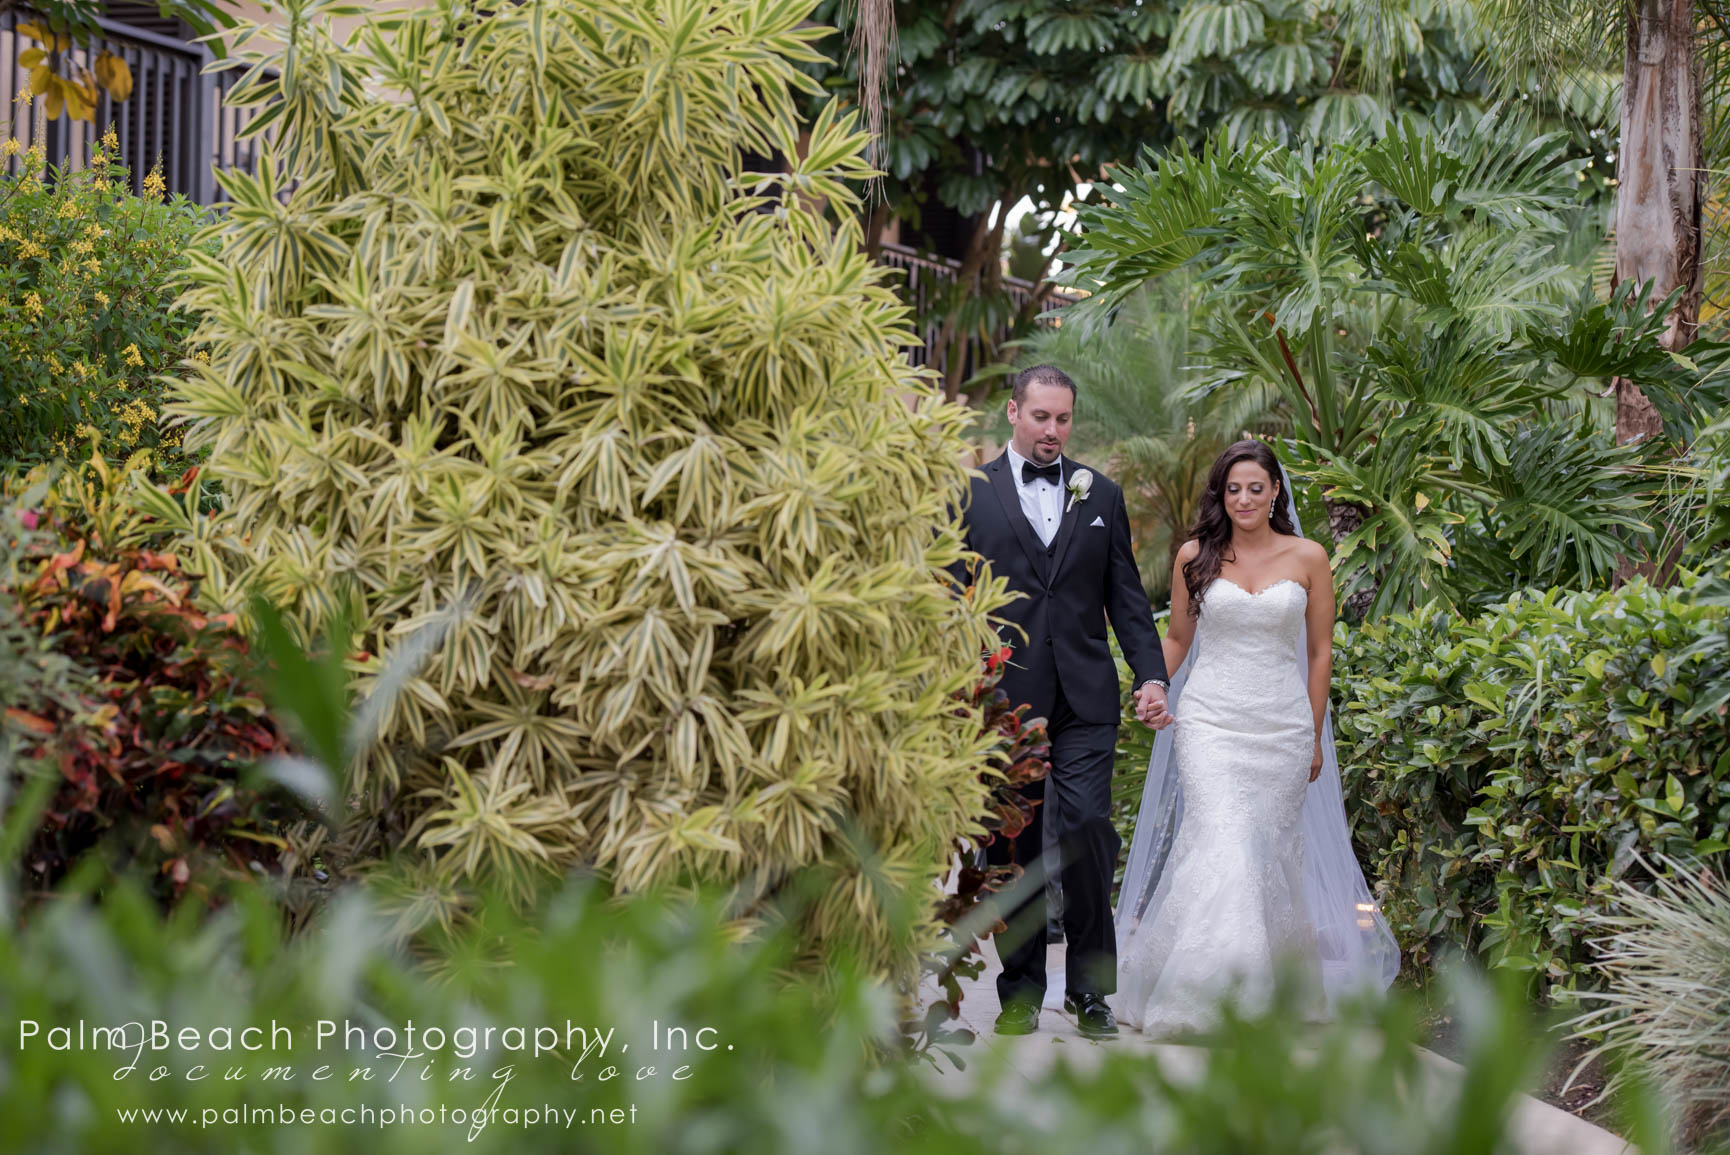 PGA National Resort Wedding by Palm Beach Photography, Inc.